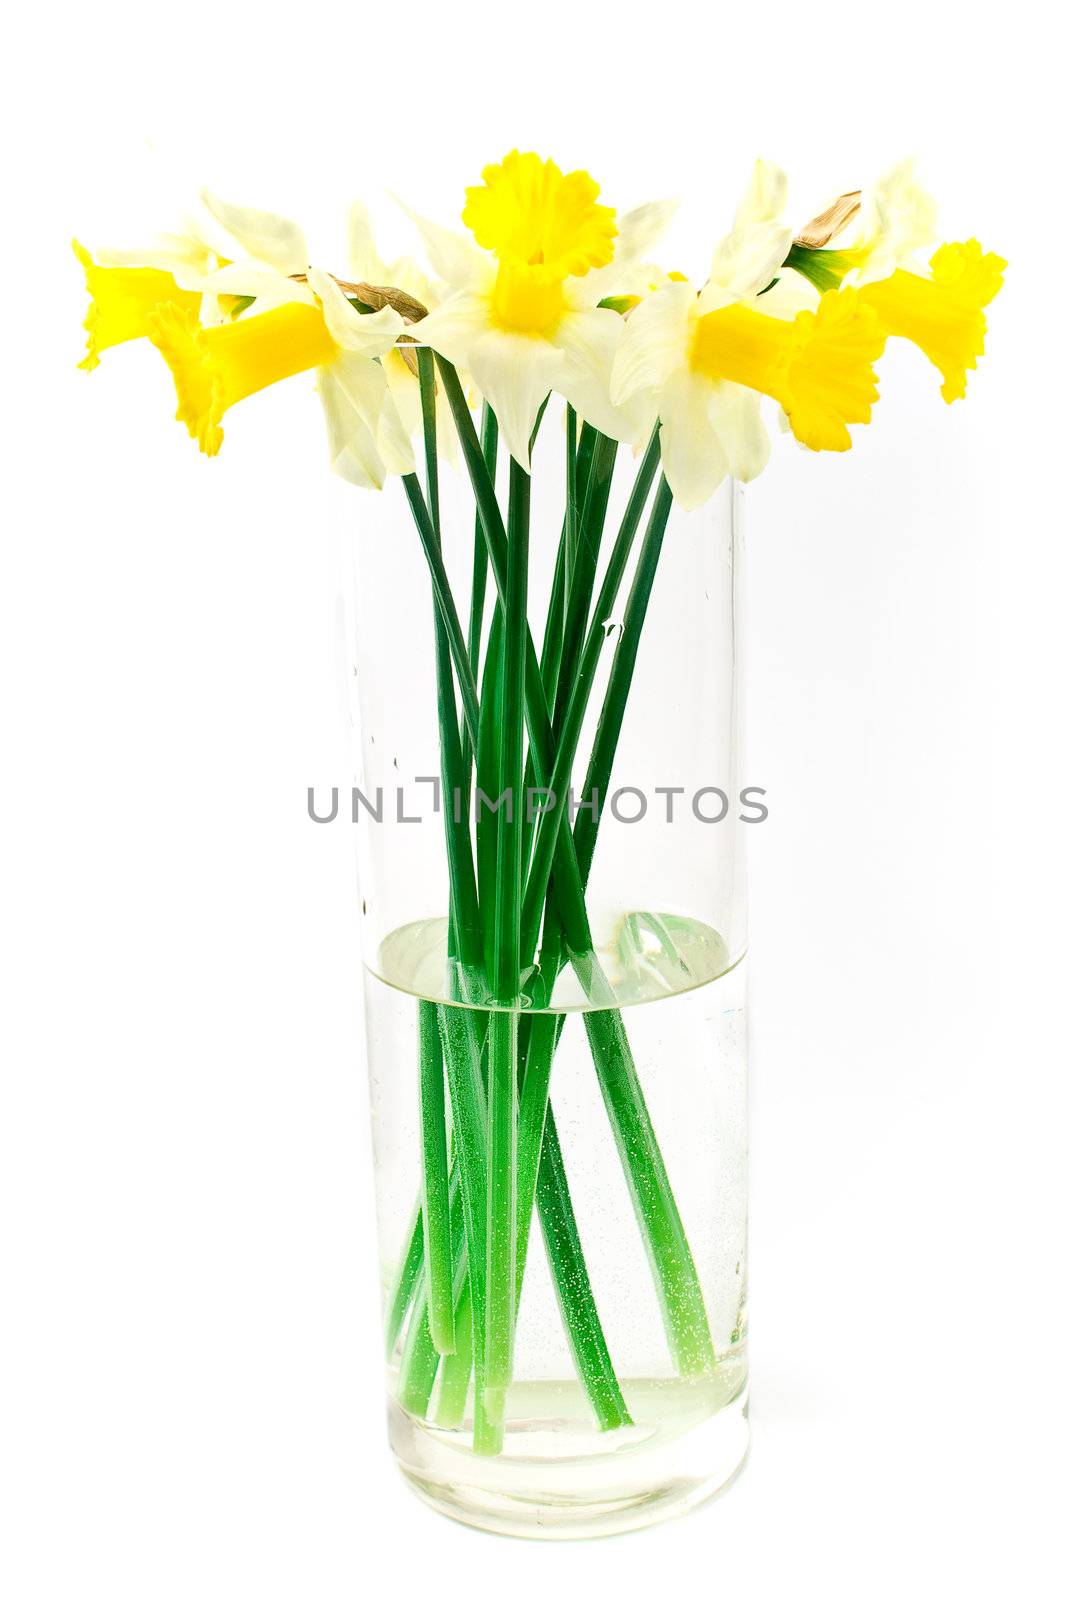 Yellow daffodils narcissus in big glass vase by gavran333